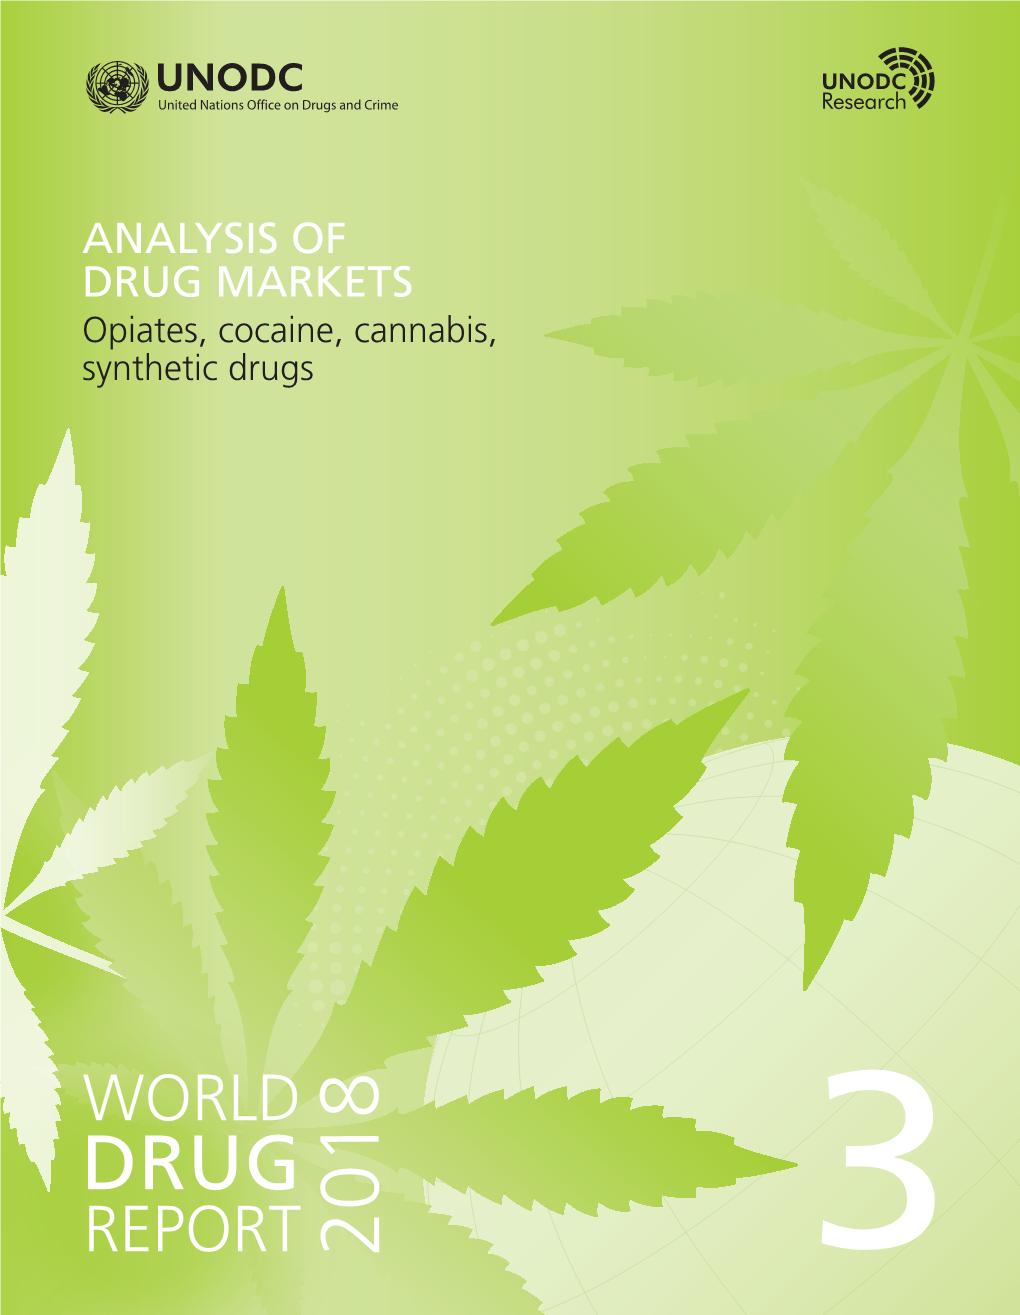 World Drug Report 2018 (United Nations Publication, Sales No